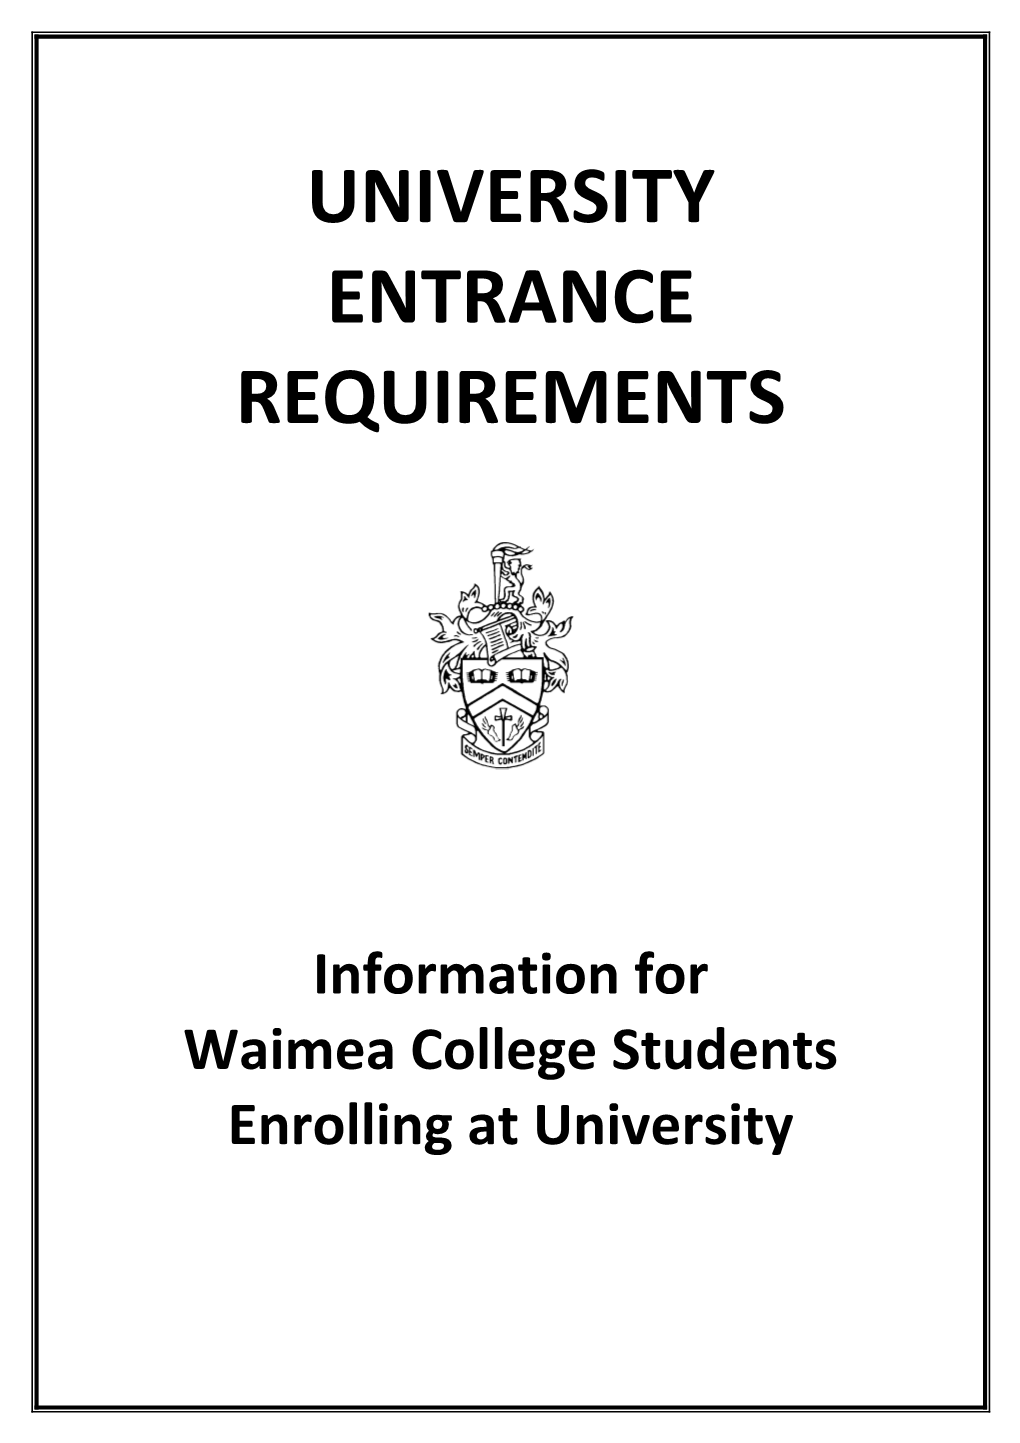 Waimea College Students Enrolling at University